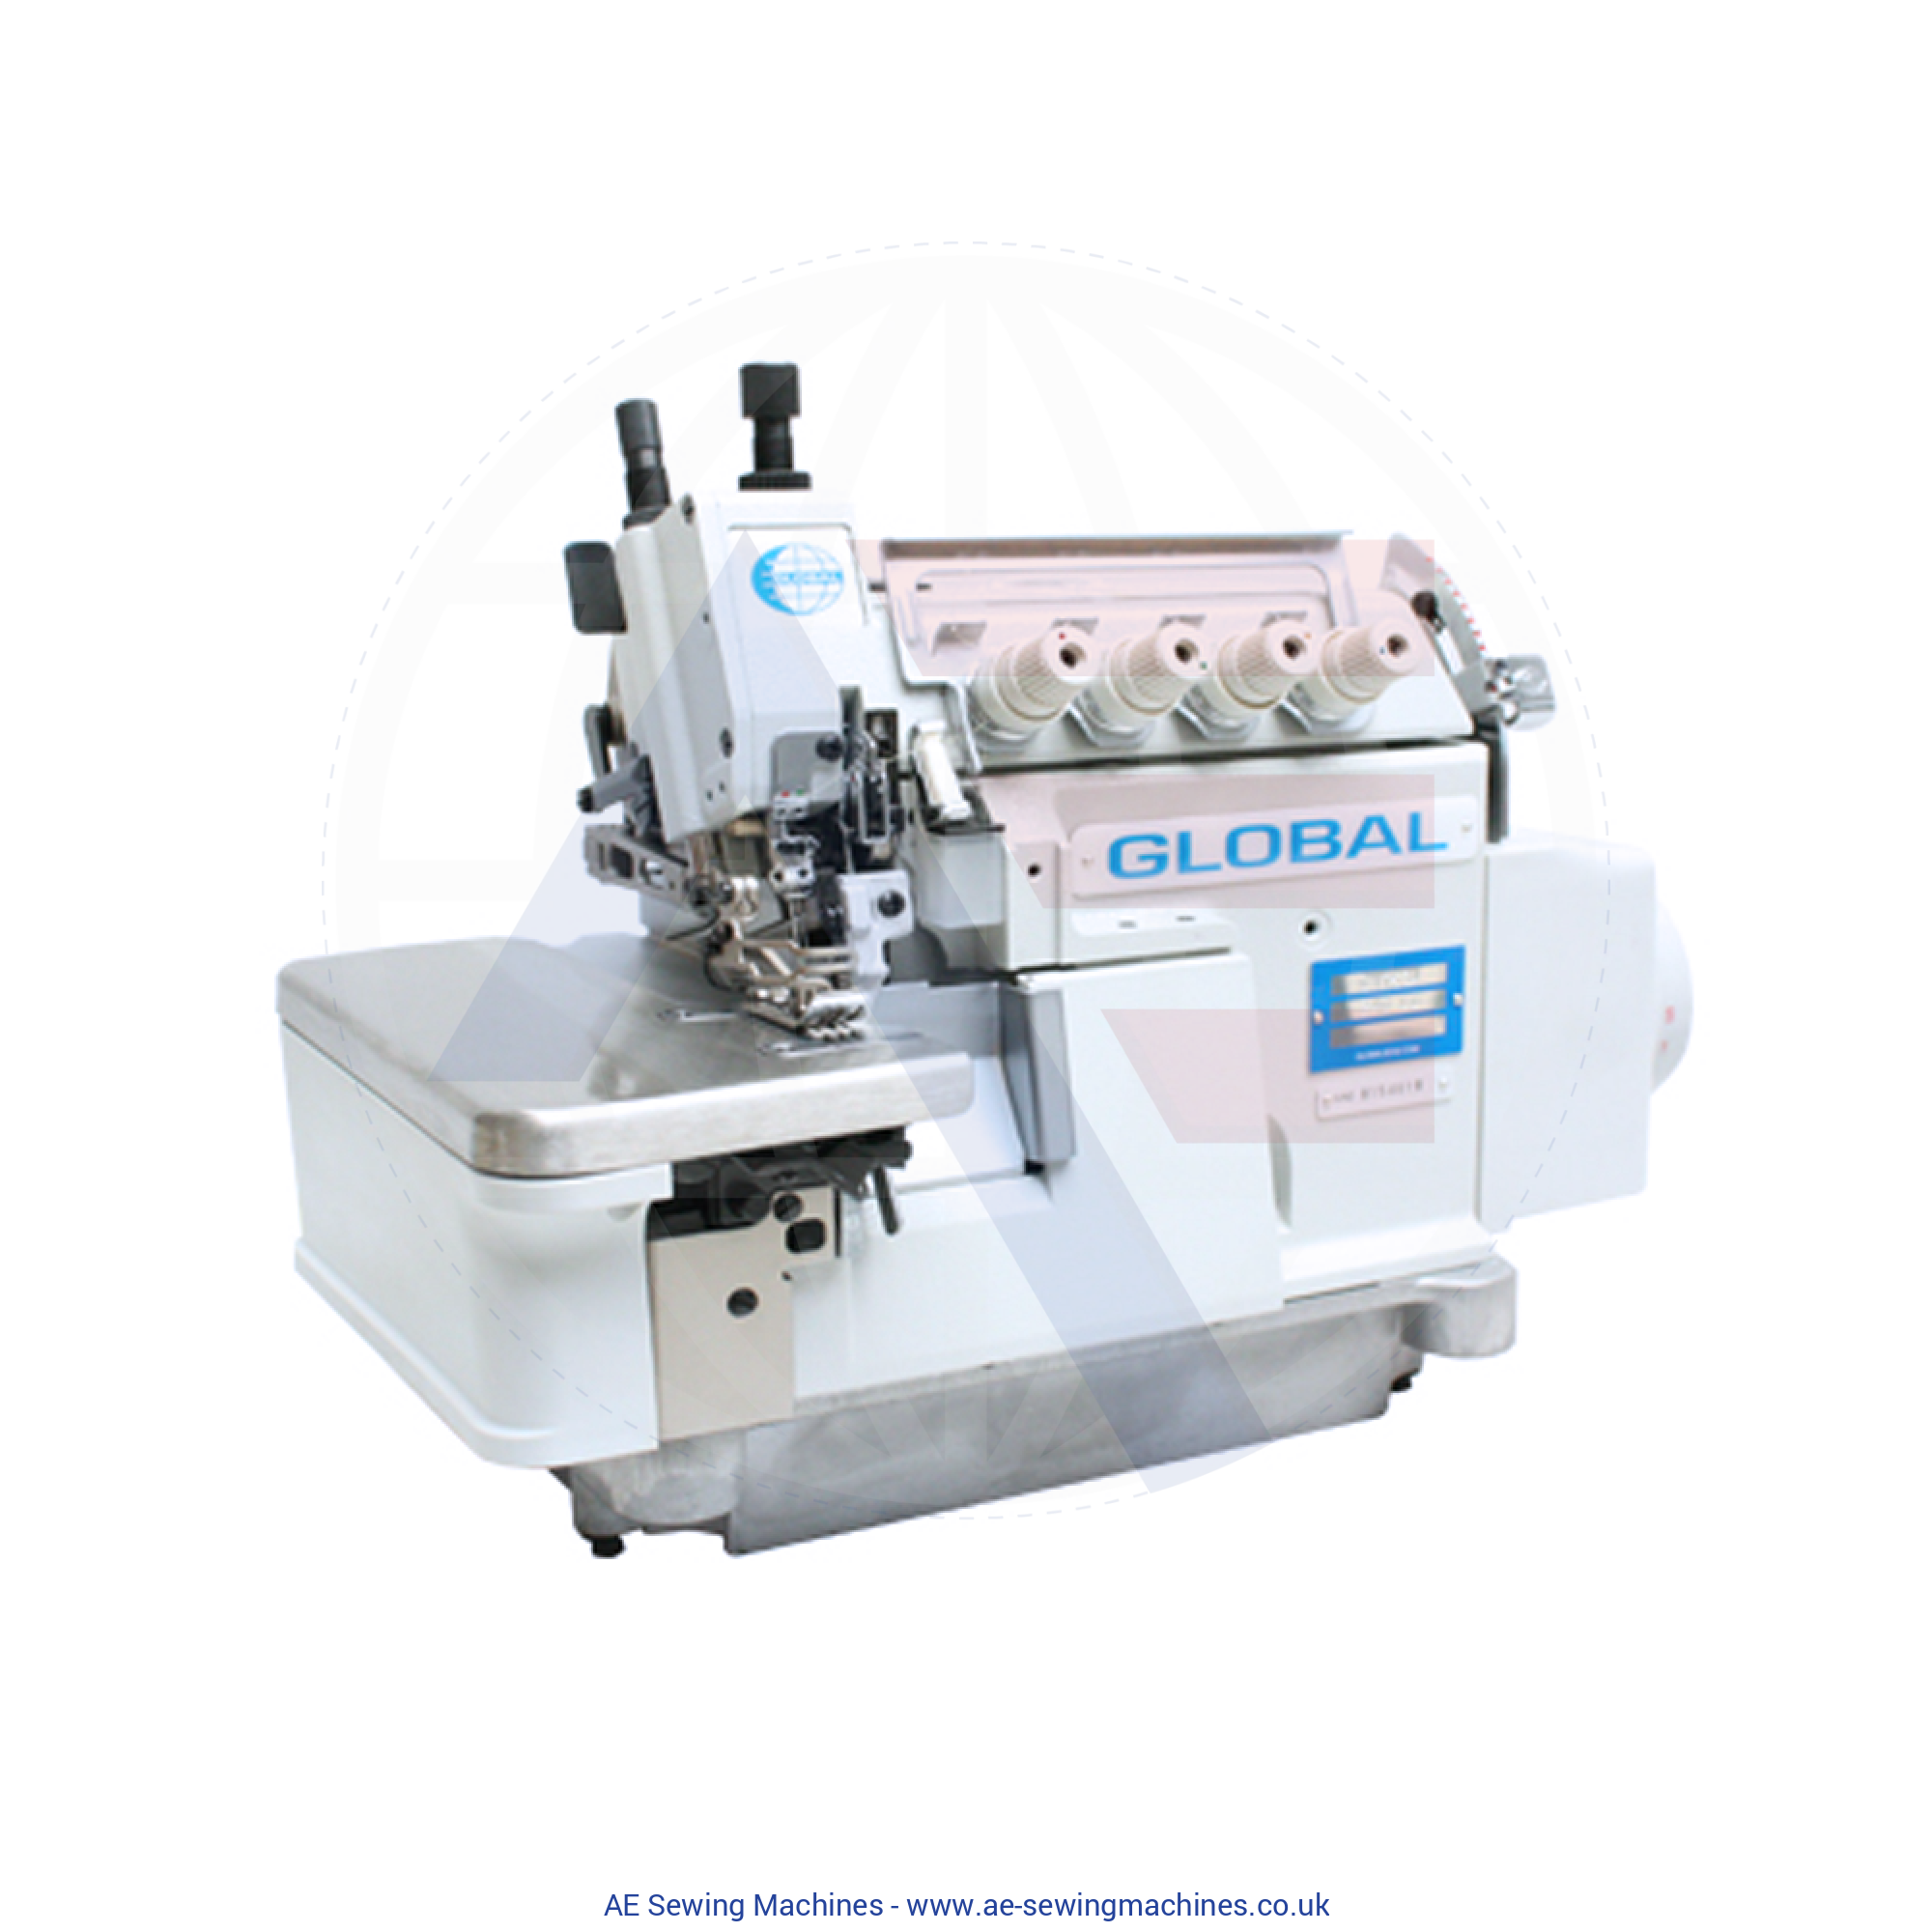 Global Ovt 530 Dd Series Overlock Machine Sewing Machines